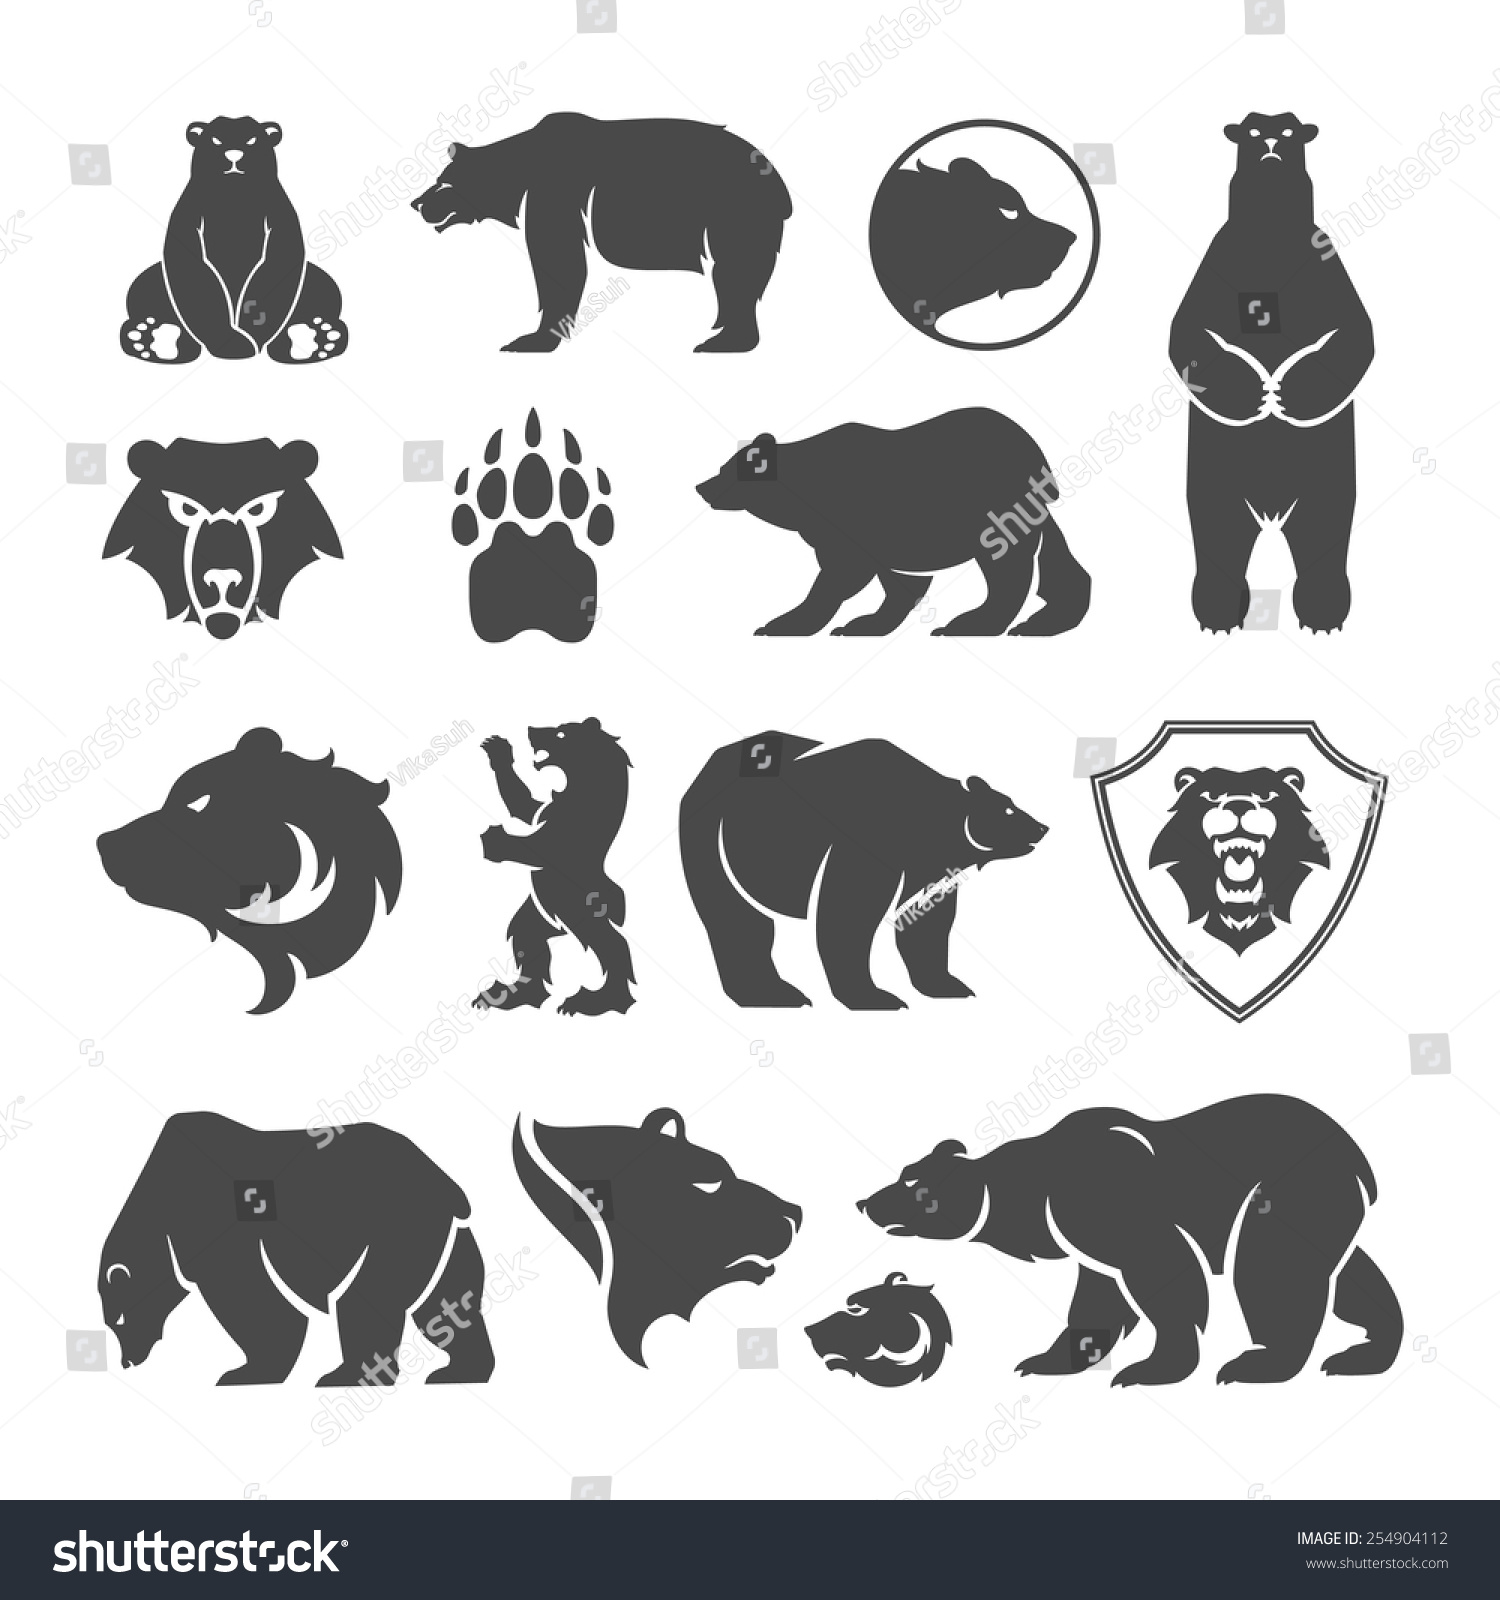 SVG of Vintage bear mascot, emblems, symbols, icons set. Can be used for T-shirts print, labels, badges, stickers, logotypes vector illustration. svg